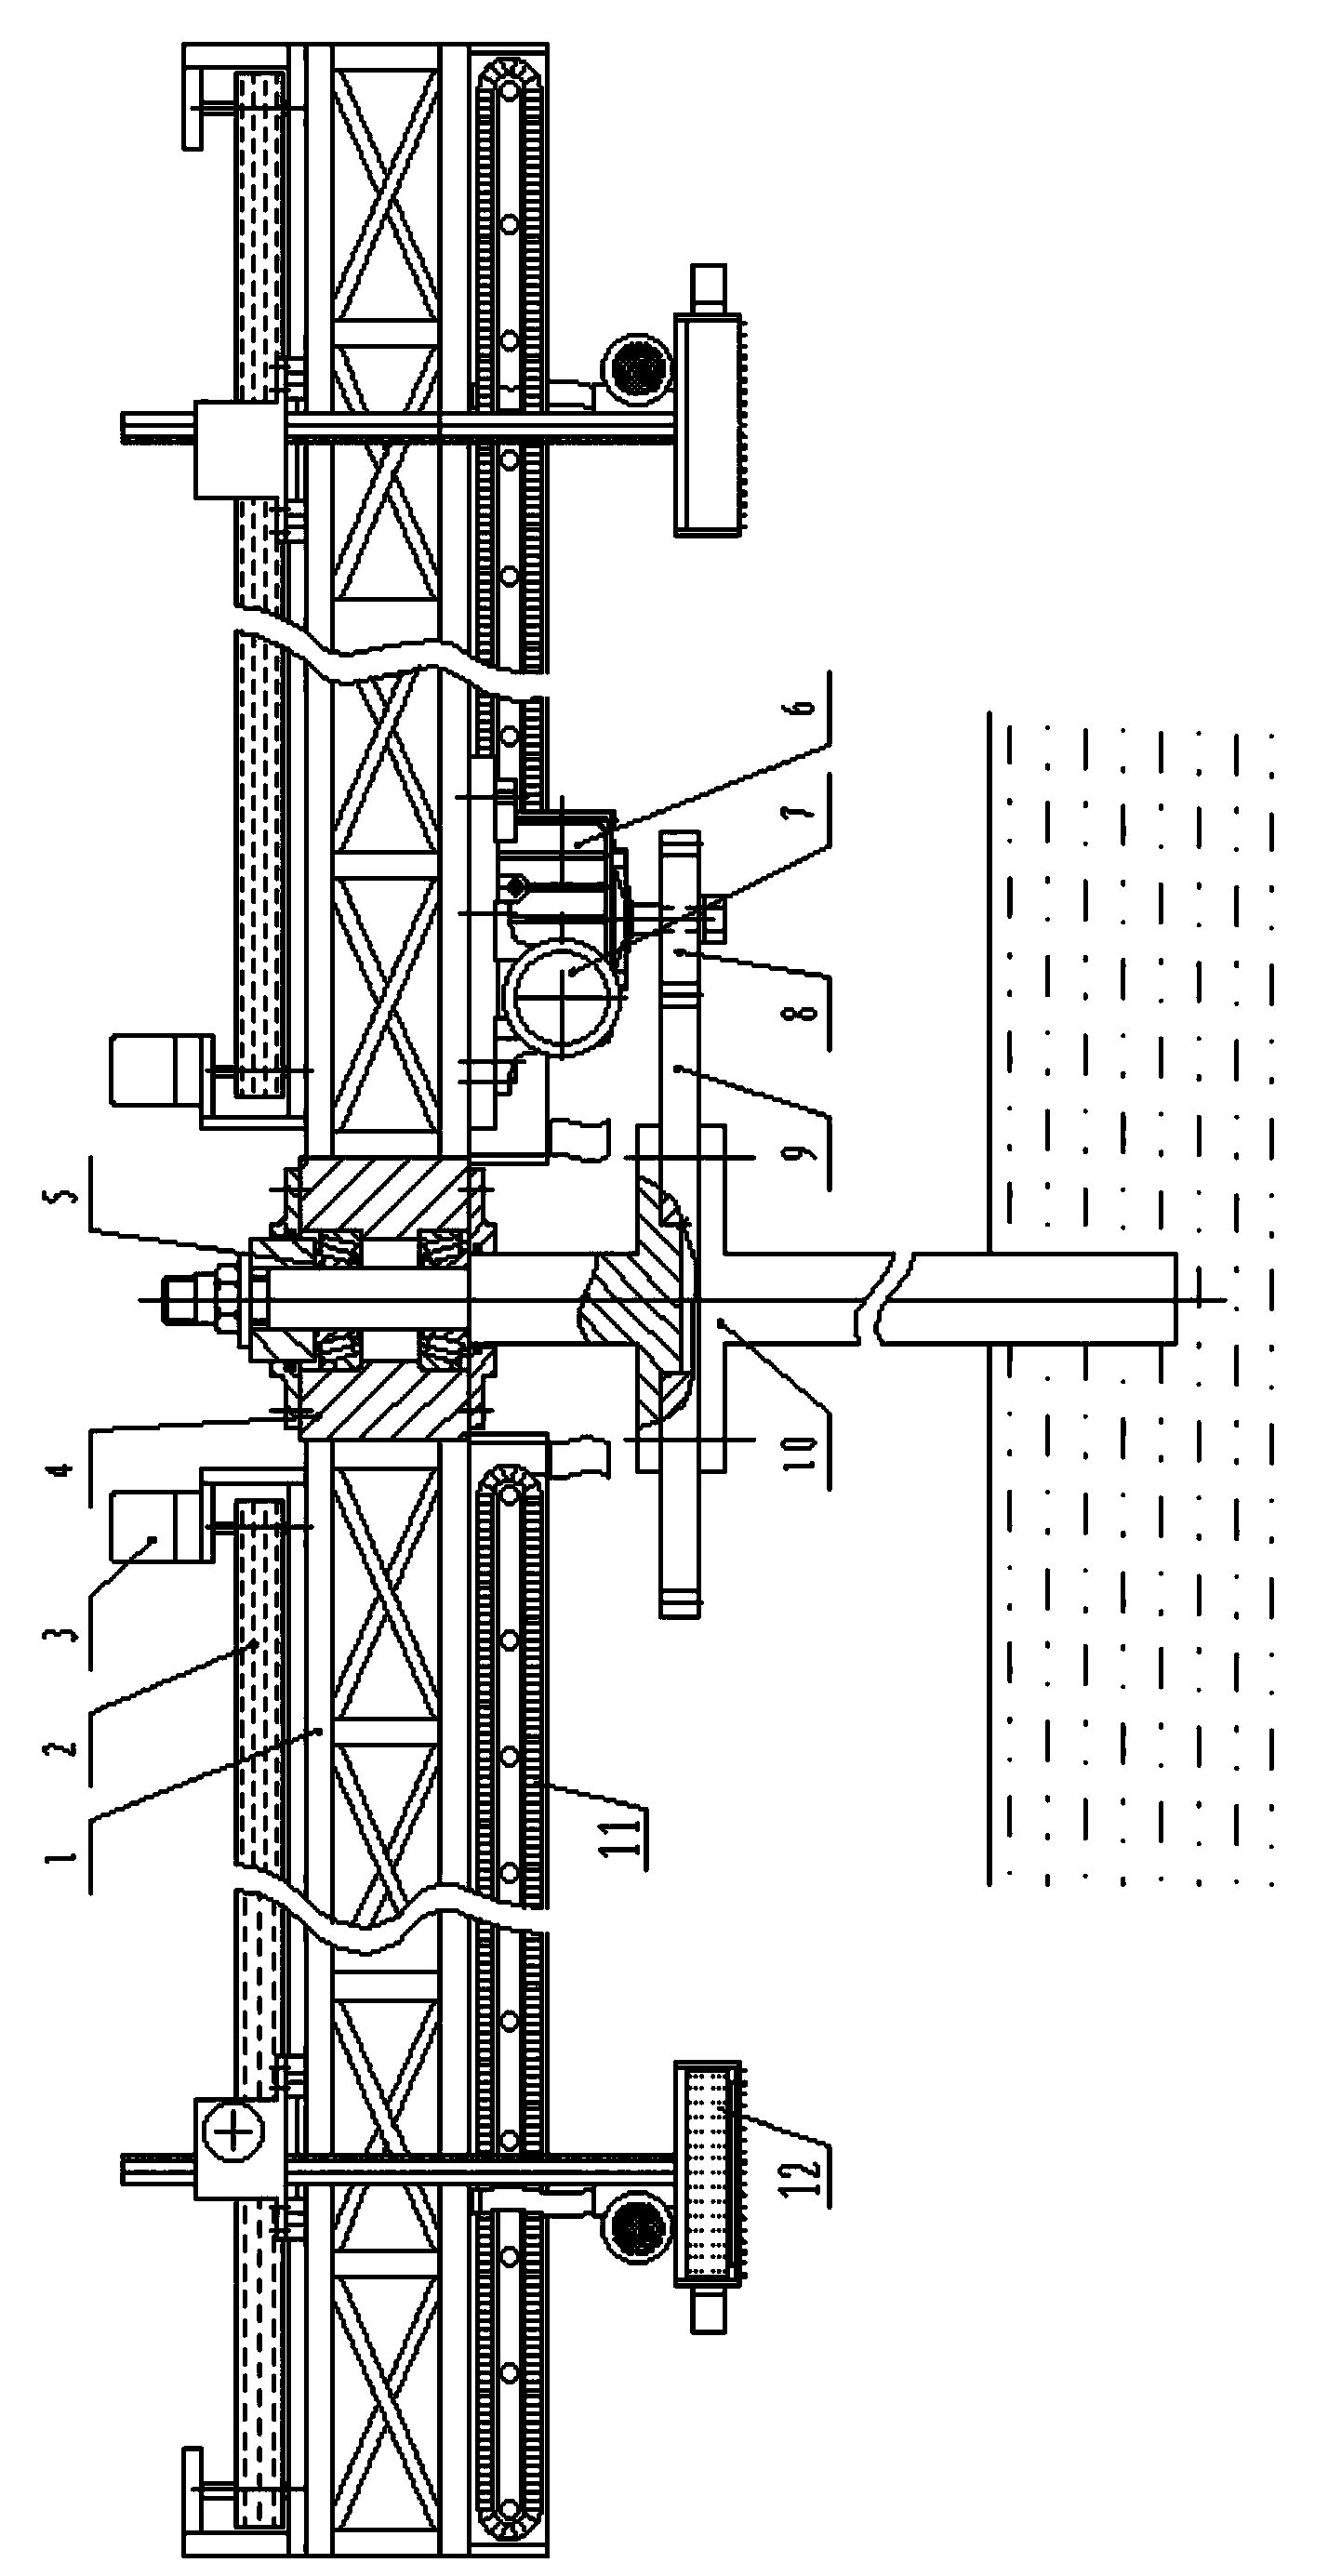 Fixed type rotary tea picking mechanism